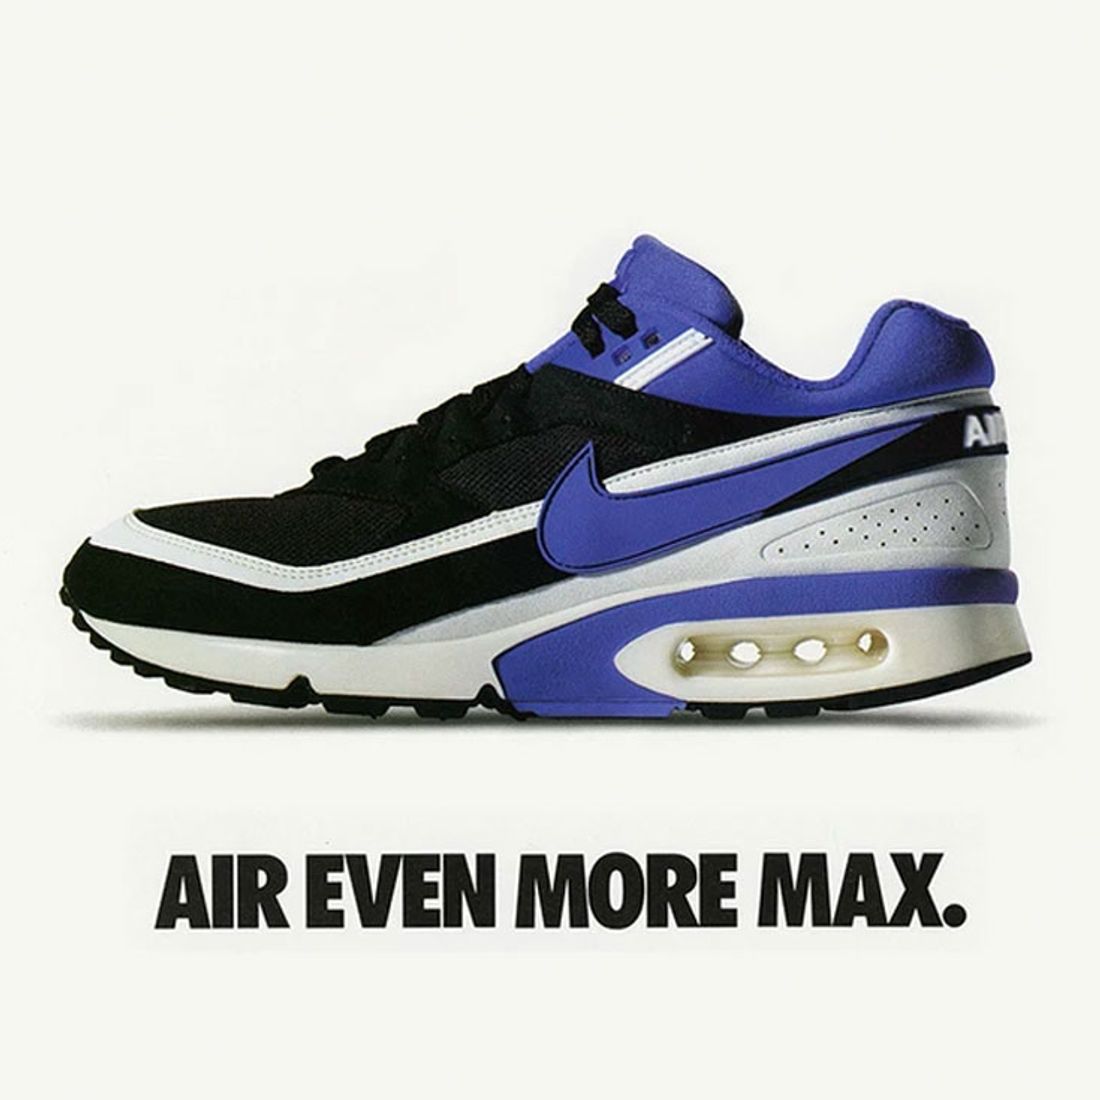 Stroomopwaarts taart Puno What Sneakerheads Want from the Nike Air Max BW 2021 Retro - Sneaker Freaker